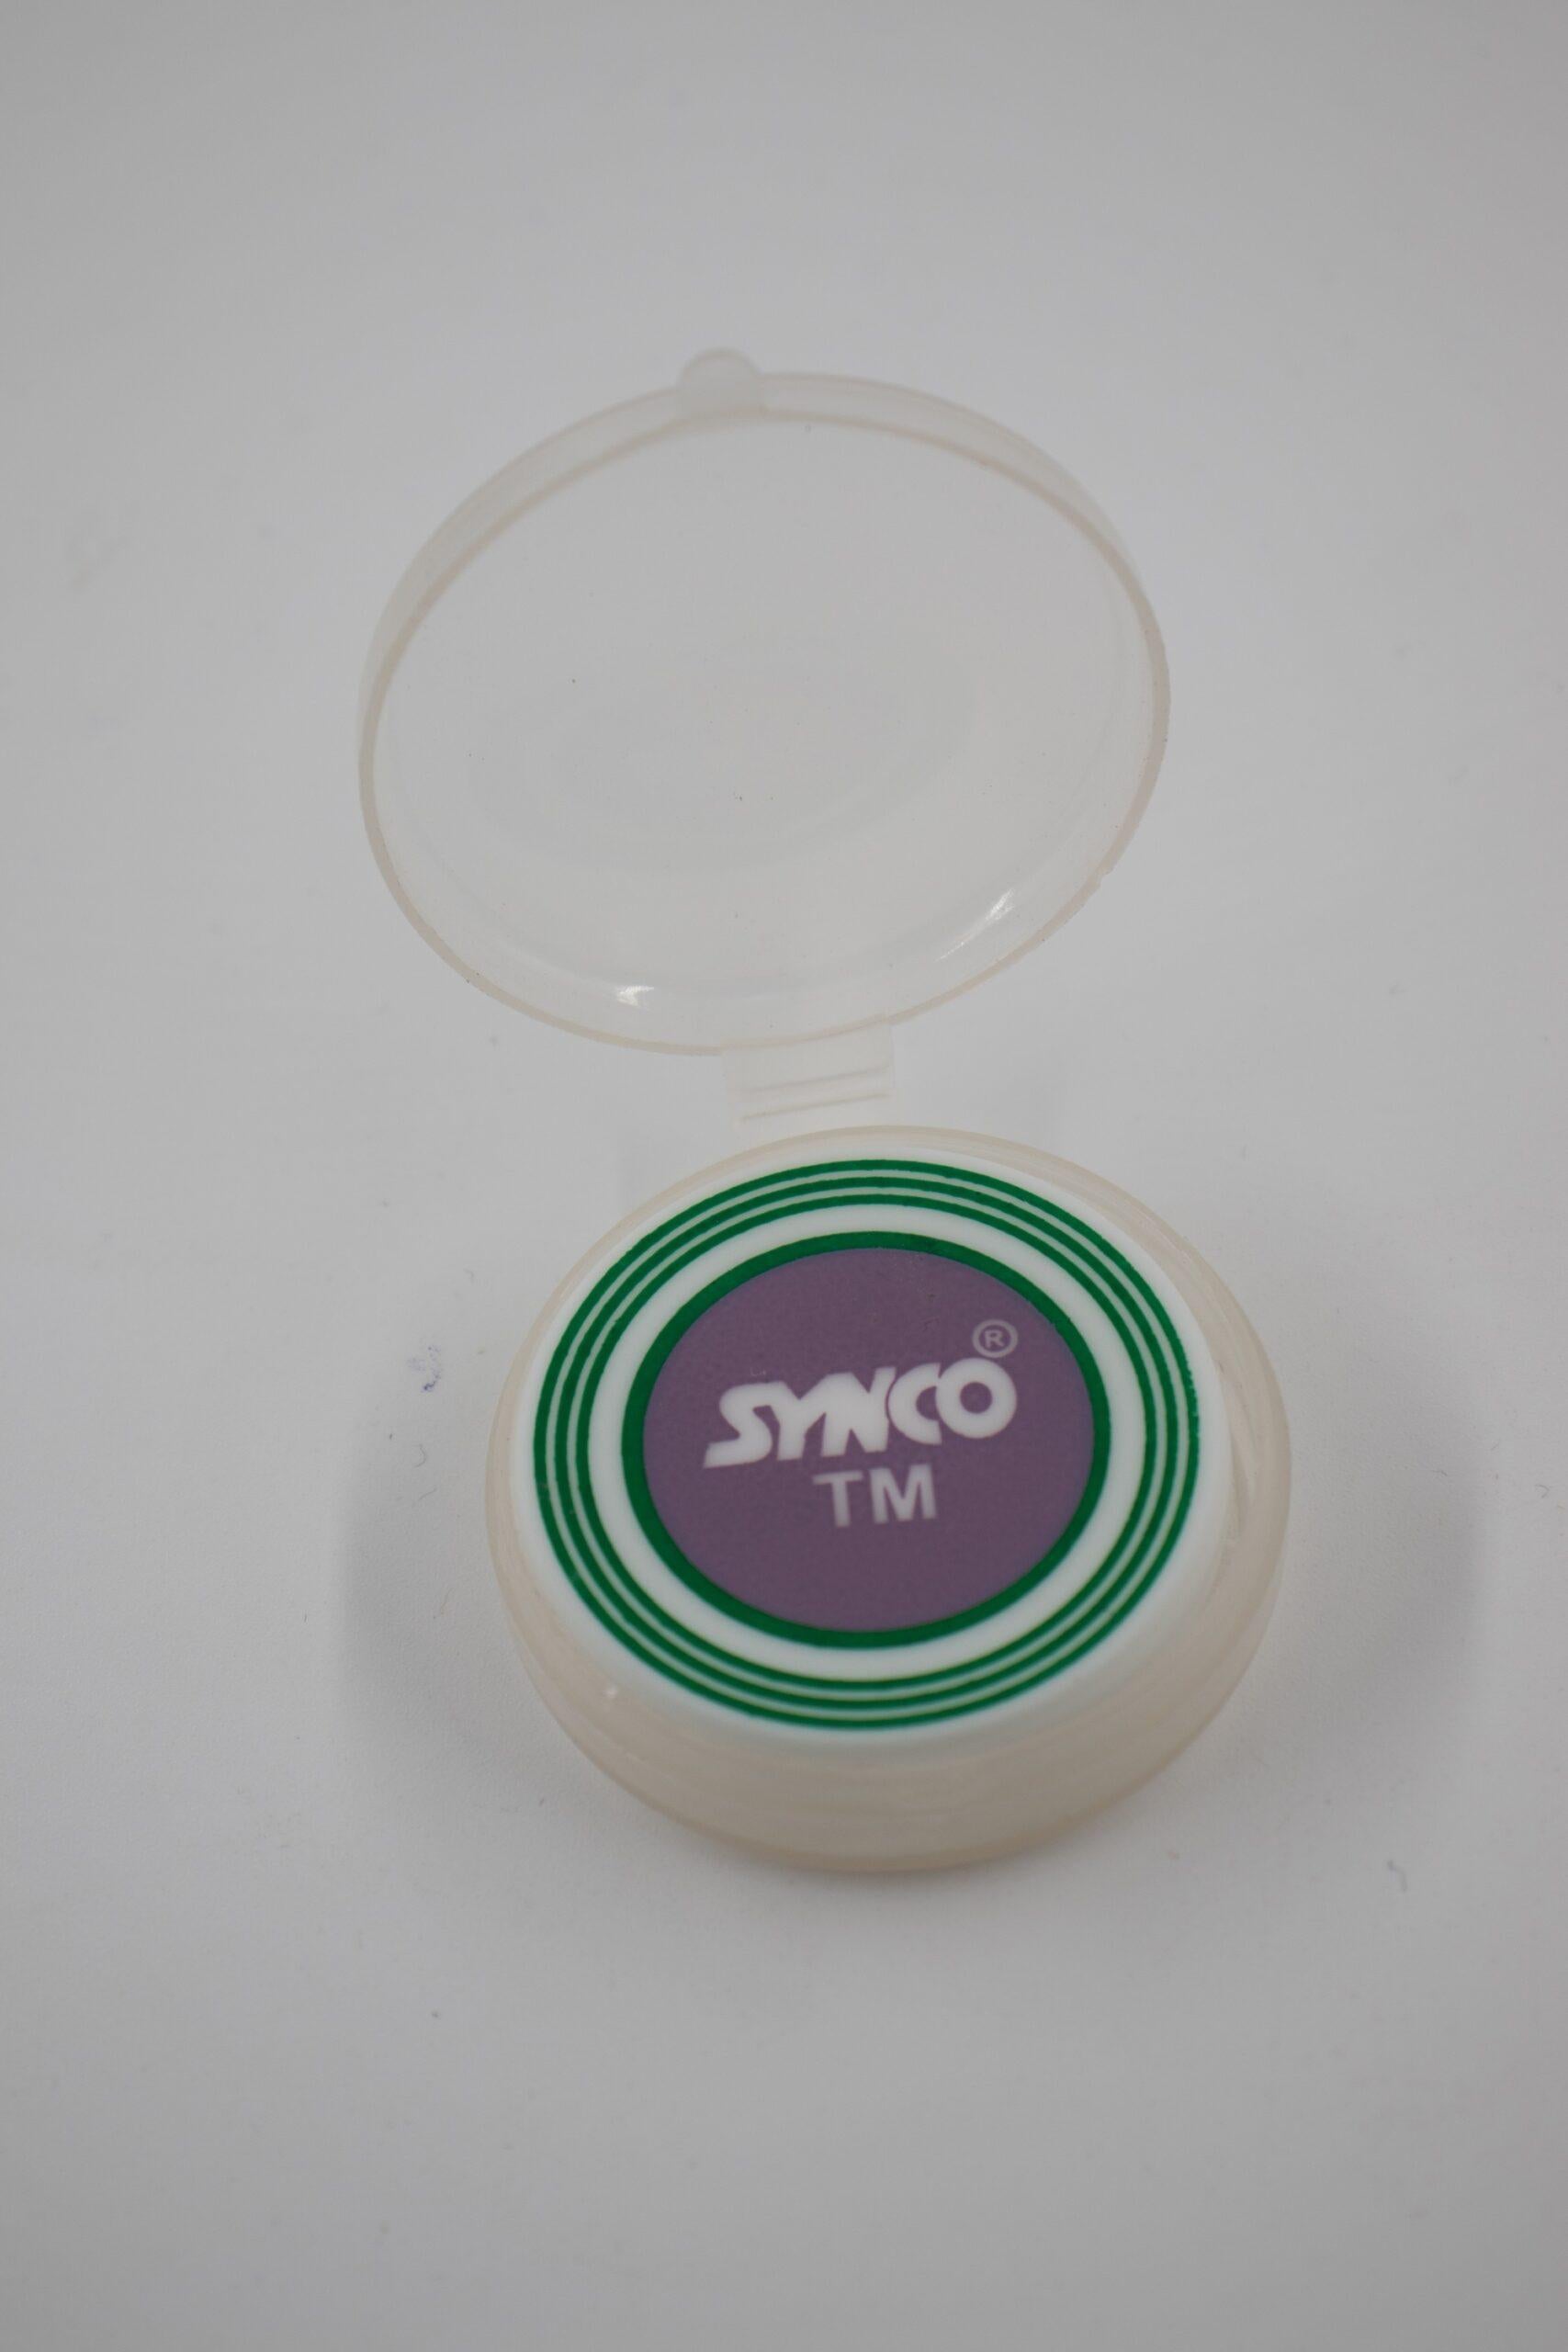 Synco TM carrom striker professional, Assorted color - 3